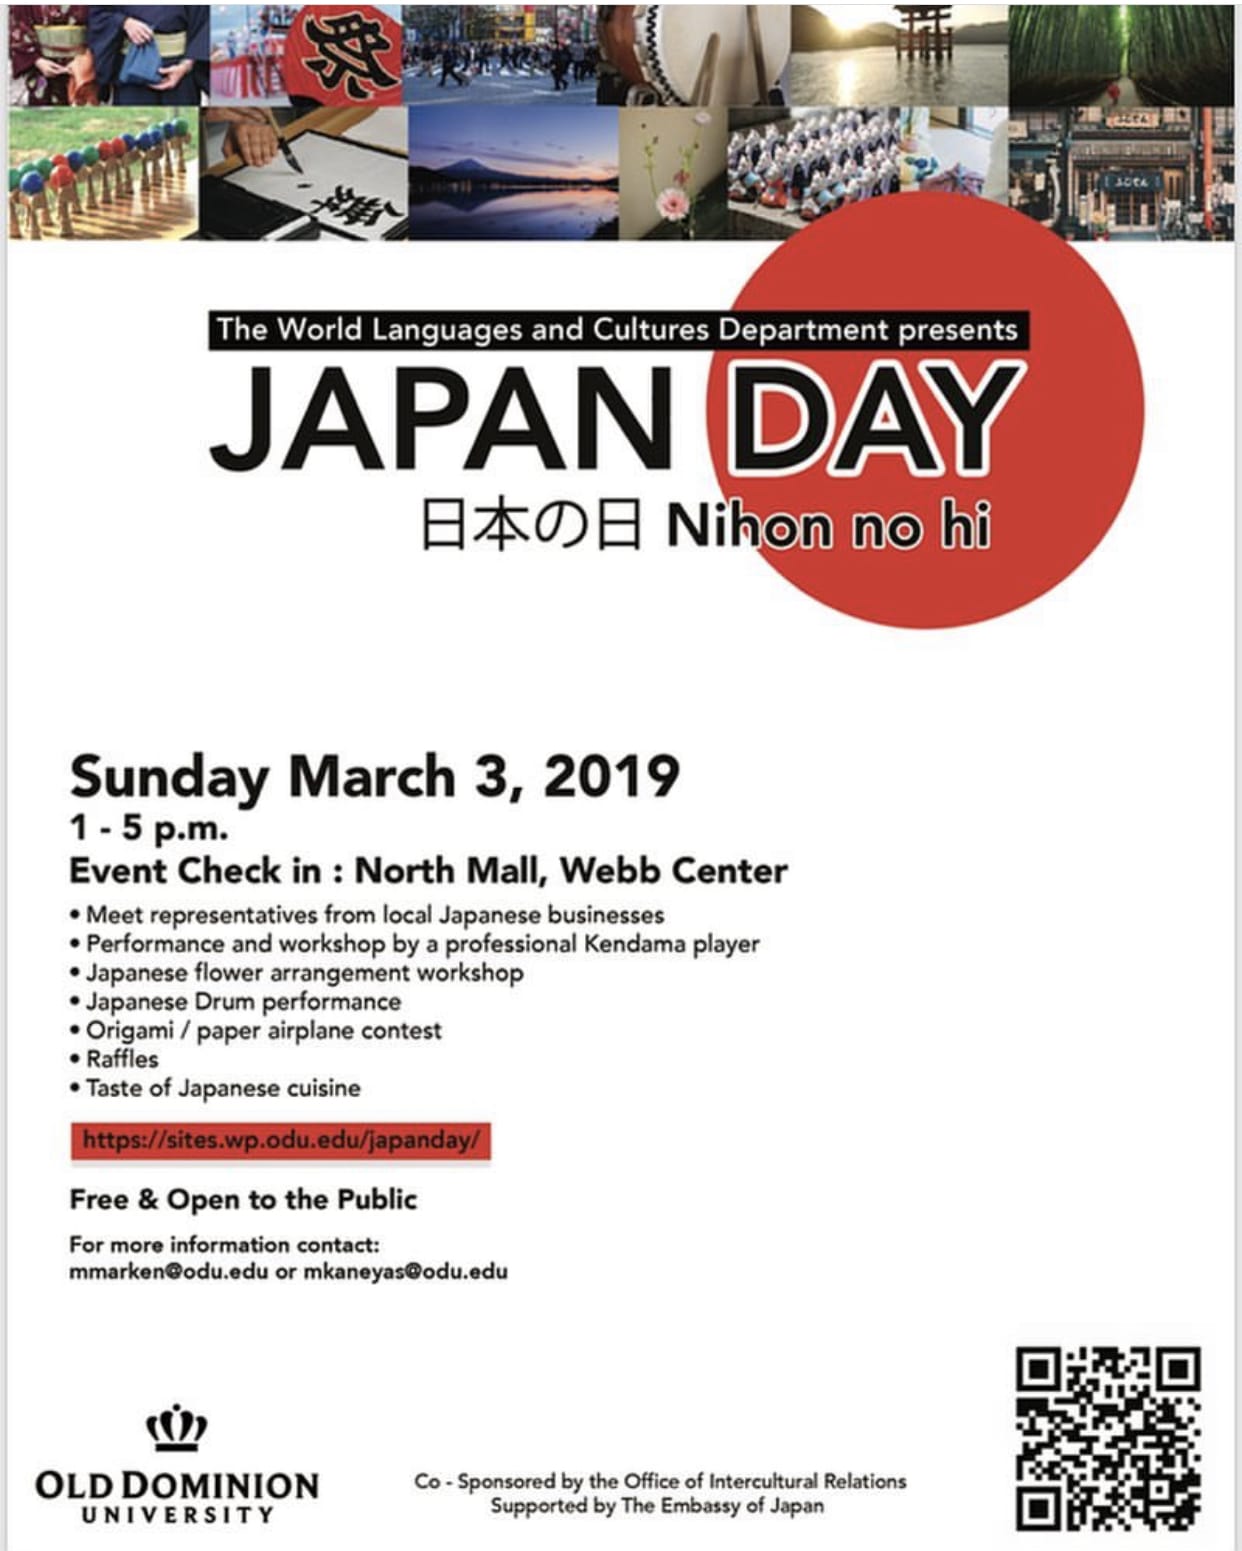 Japan Day at ODU